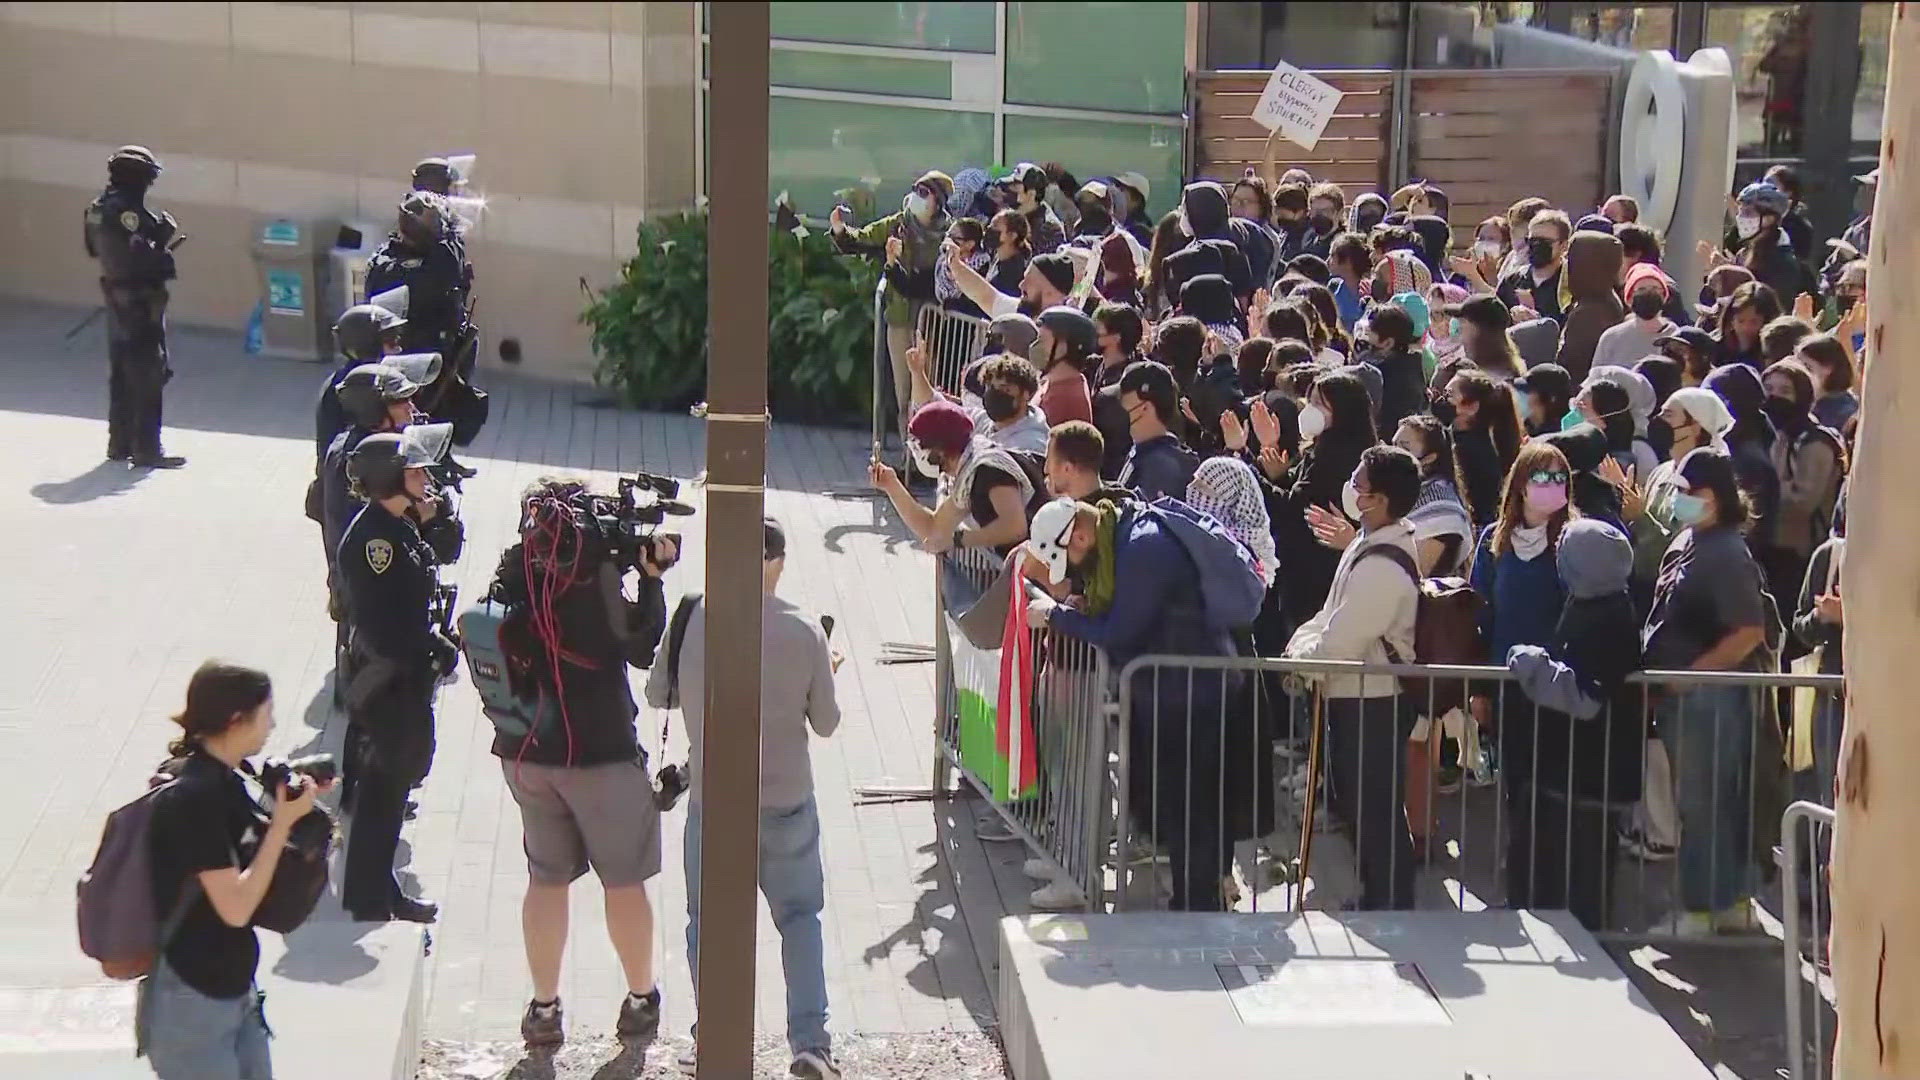 Unrest continues as police dismantle UC San Diego encampment on campus, arrest protestors